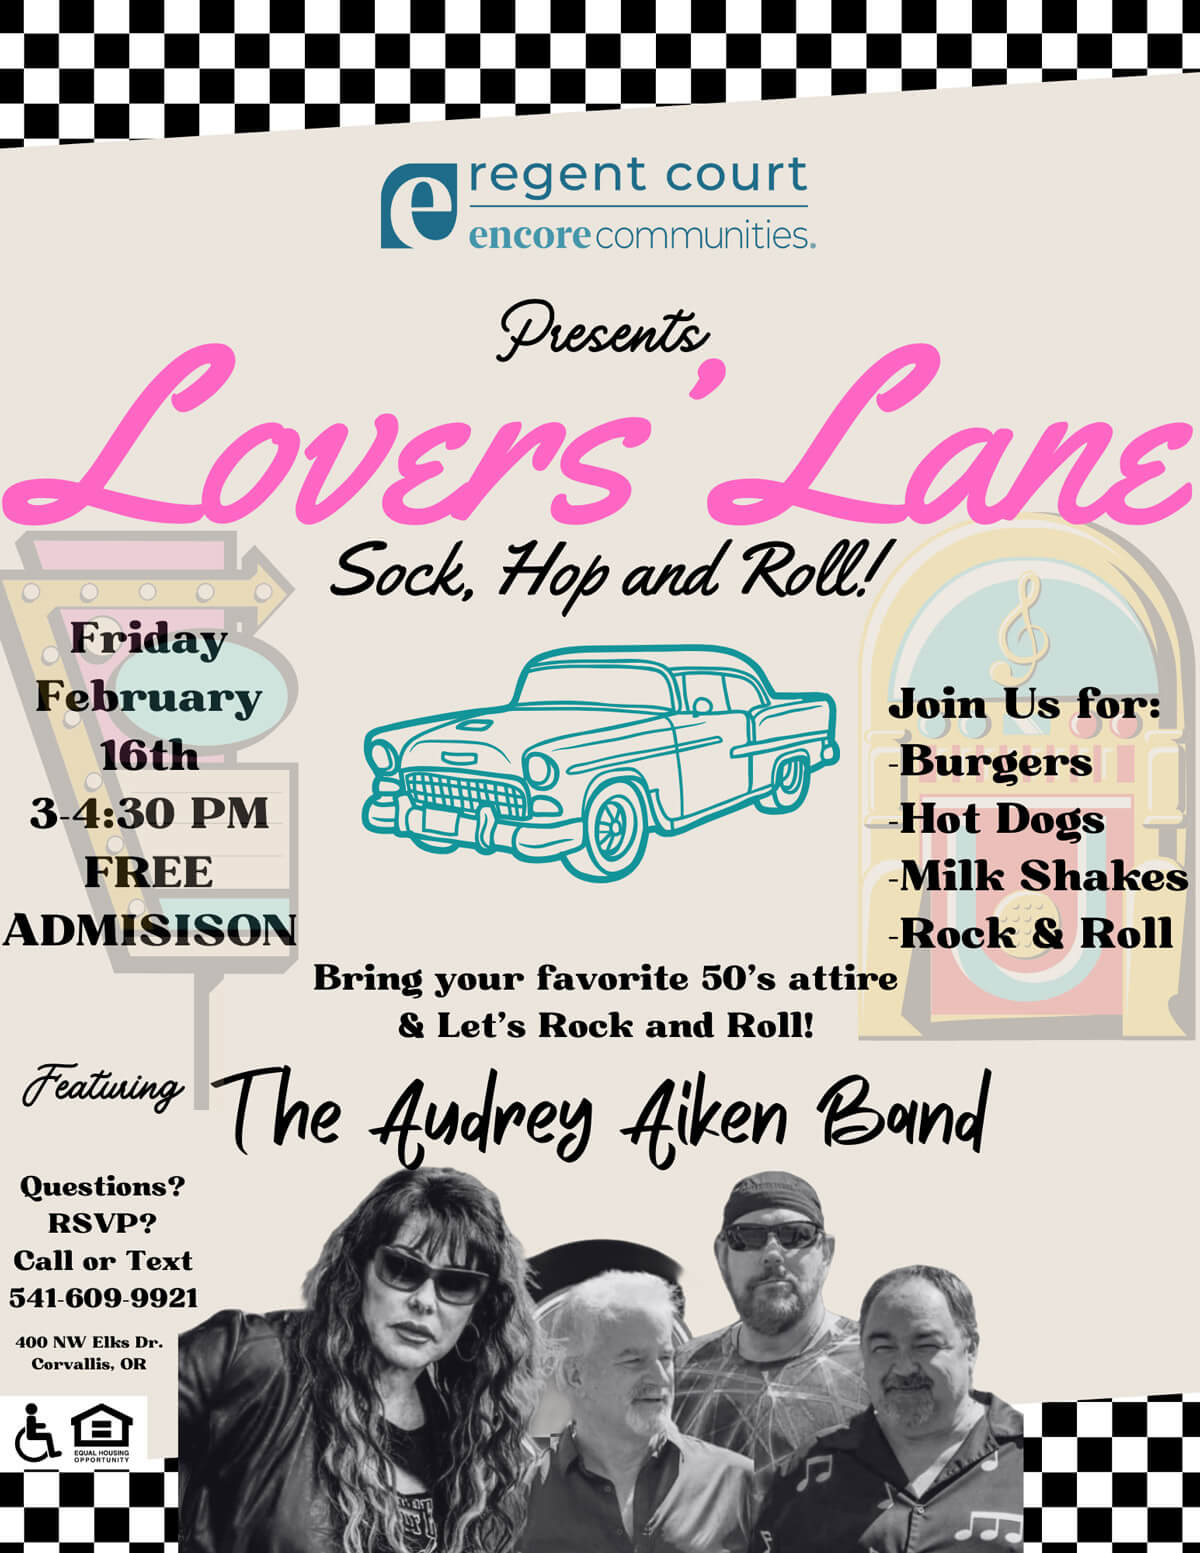 Regent Court Presents: Lover's Lane, Sock, Hop, and Roll!